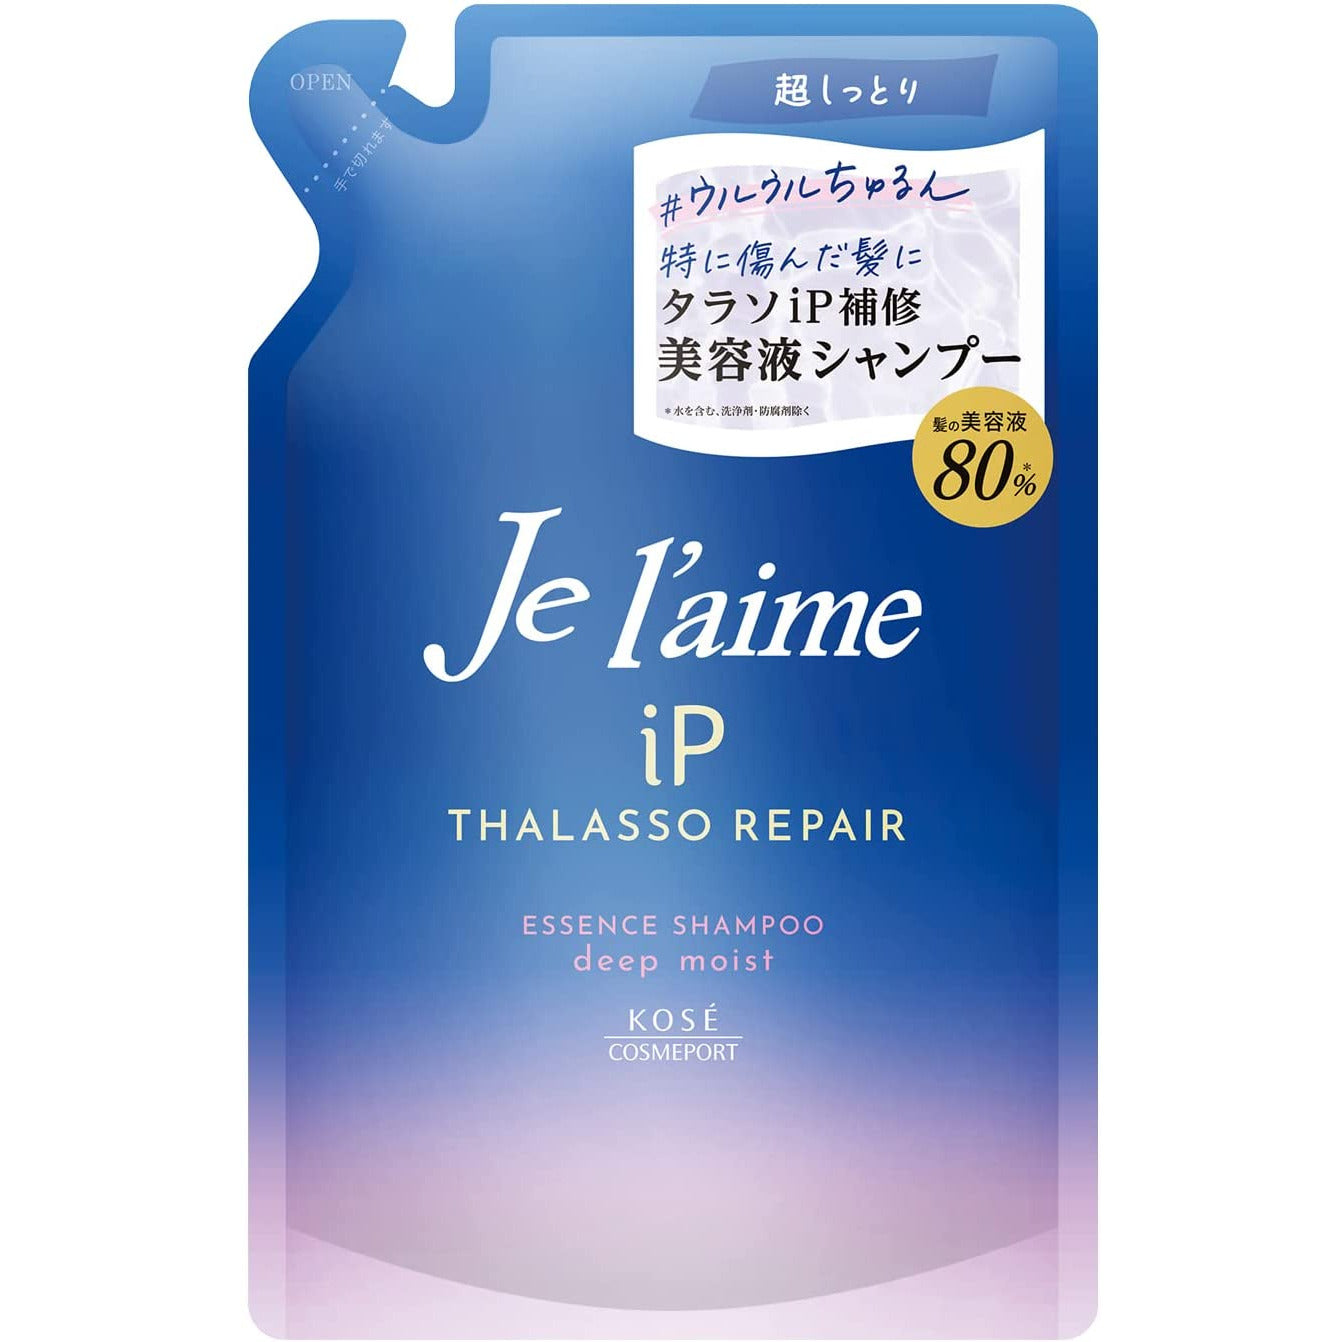 KOSE Jureme iP Thalasso Repair Repair Beauty Shampoo (Deep Moist) Refill 340mL